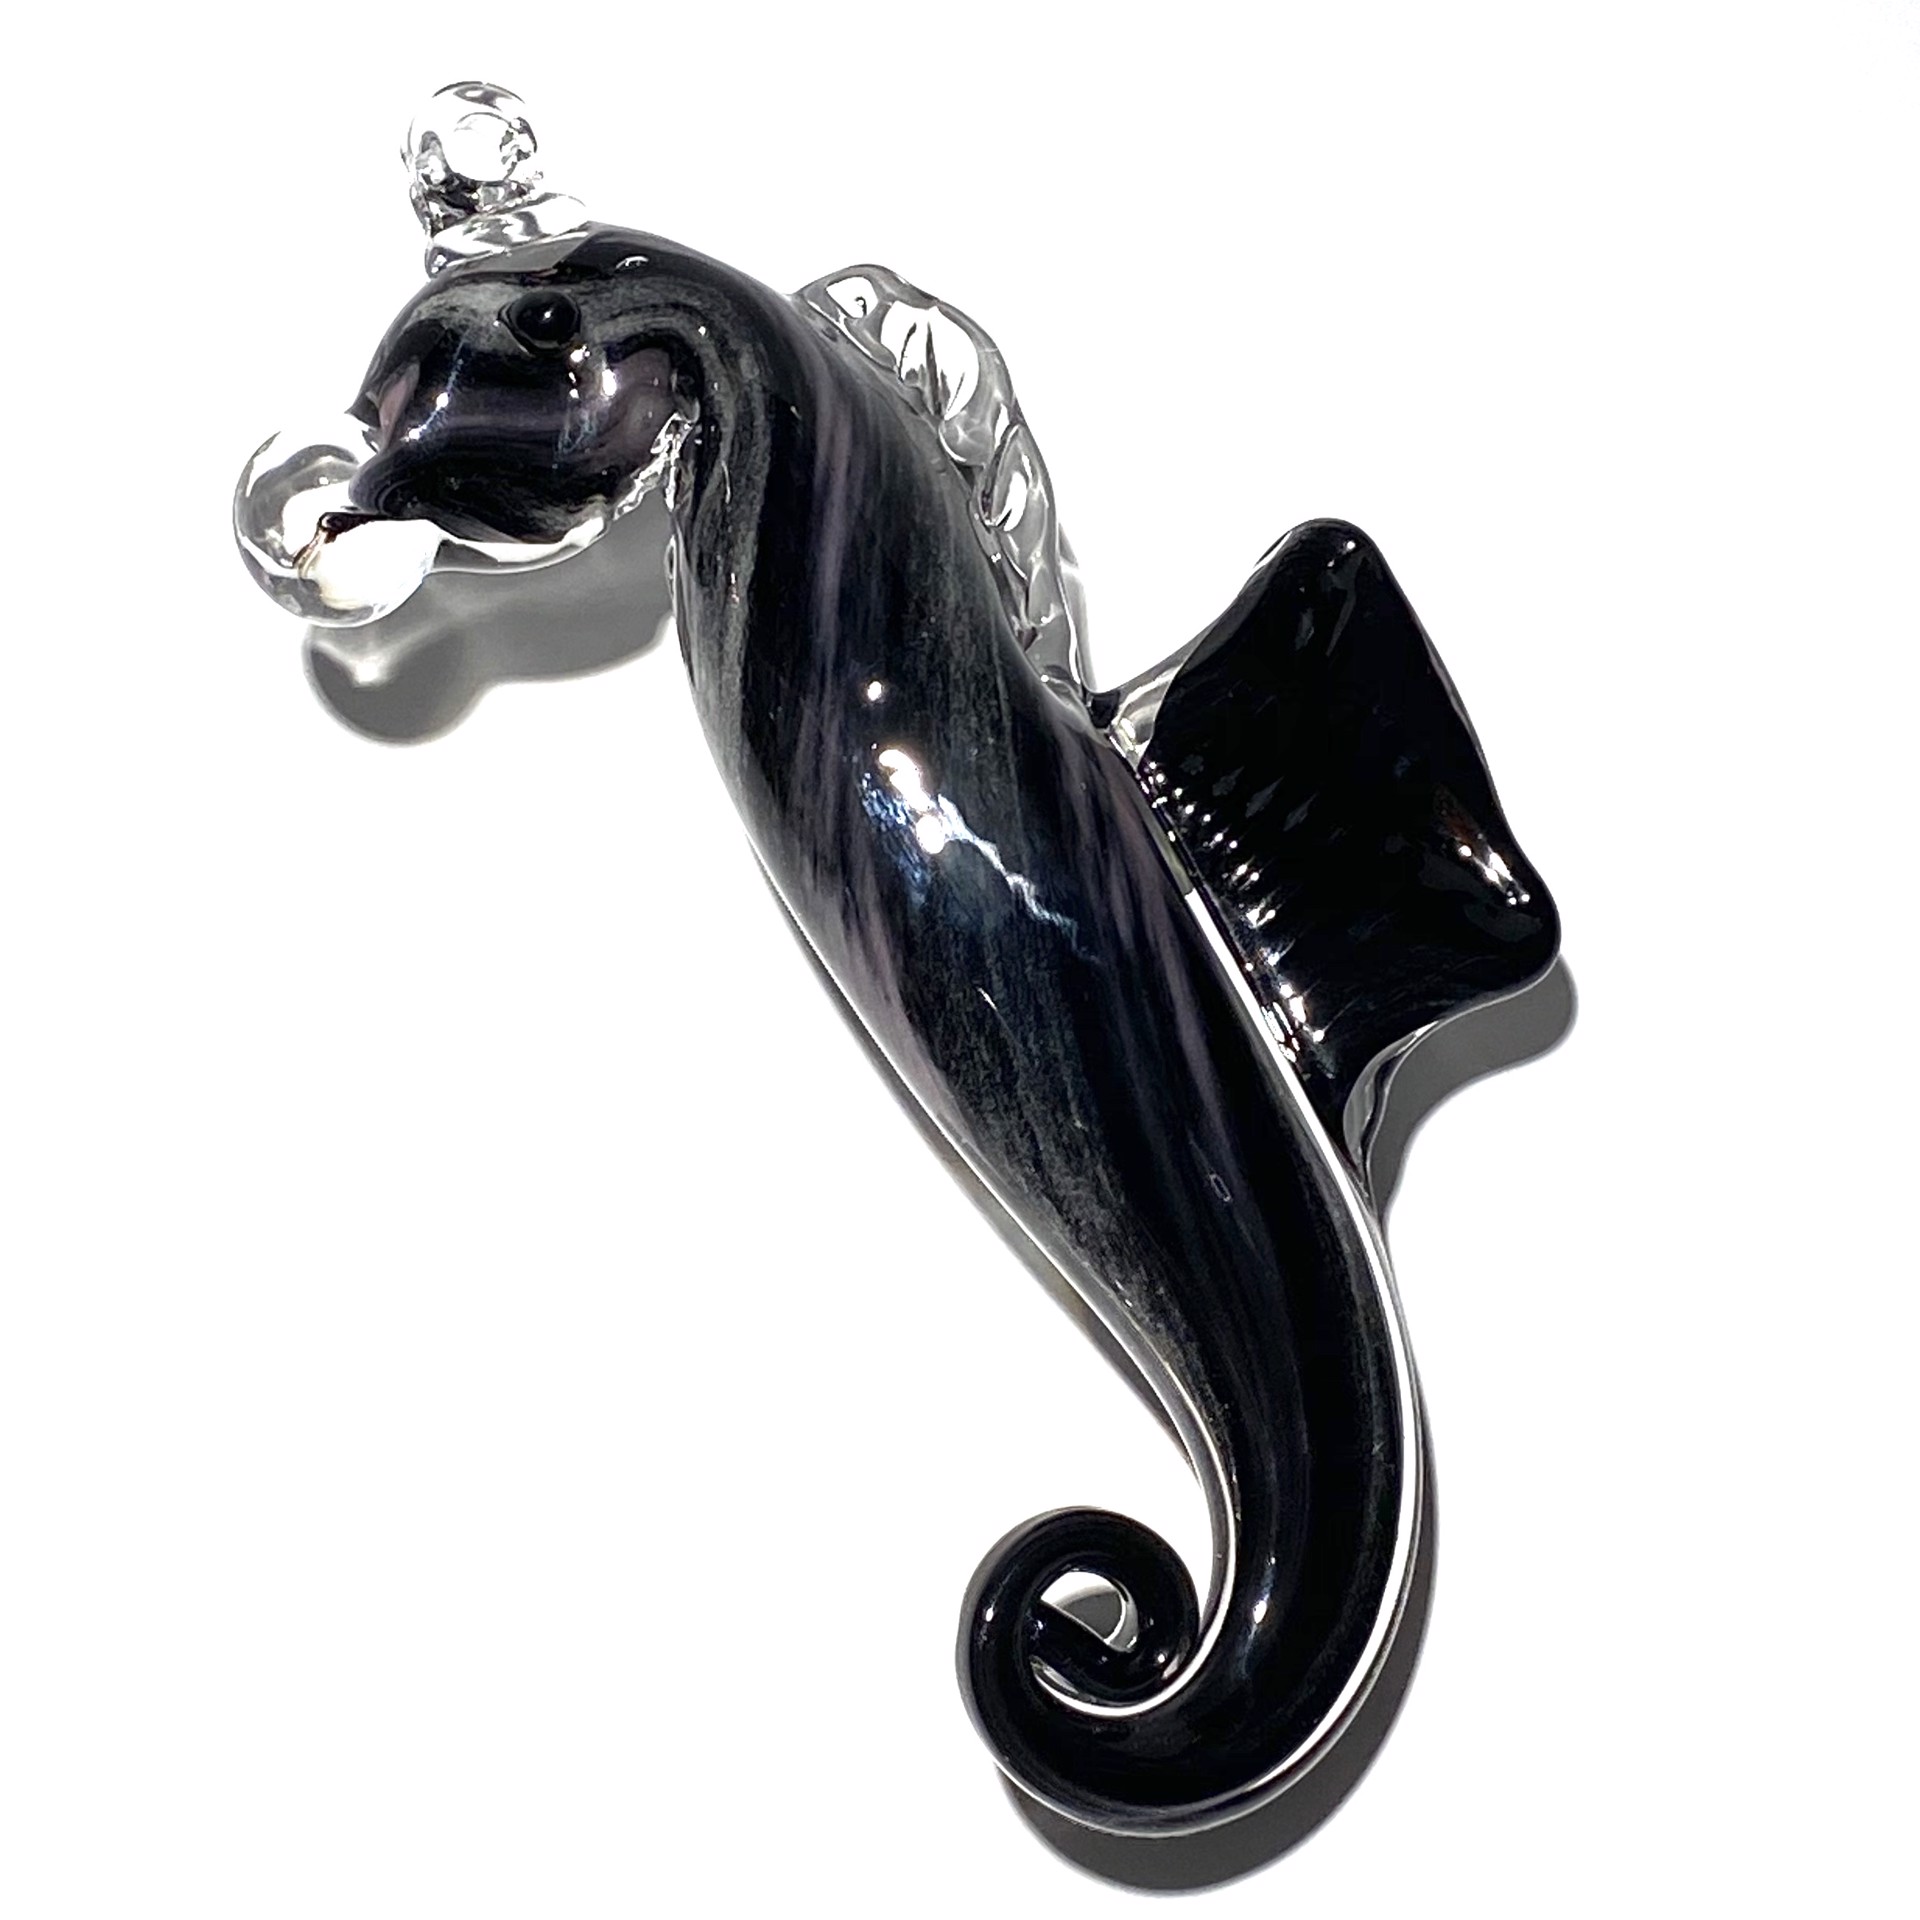 Seahorse-Black and Purple, Ornament, JG2 by John Glass